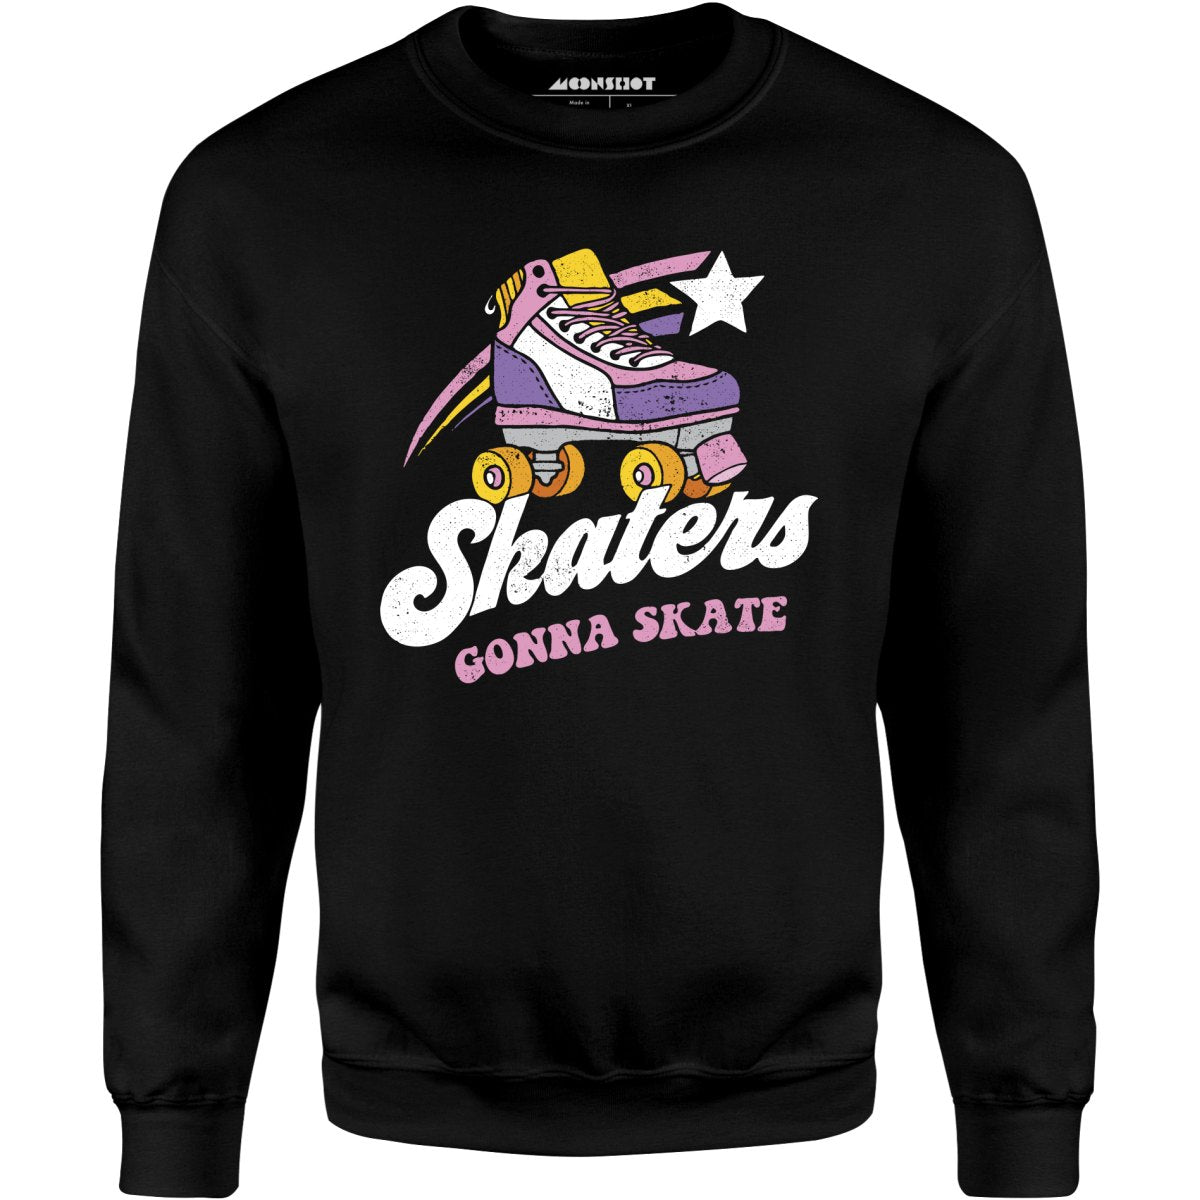 Skaters Gonna Skate - Unisex Sweatshirt